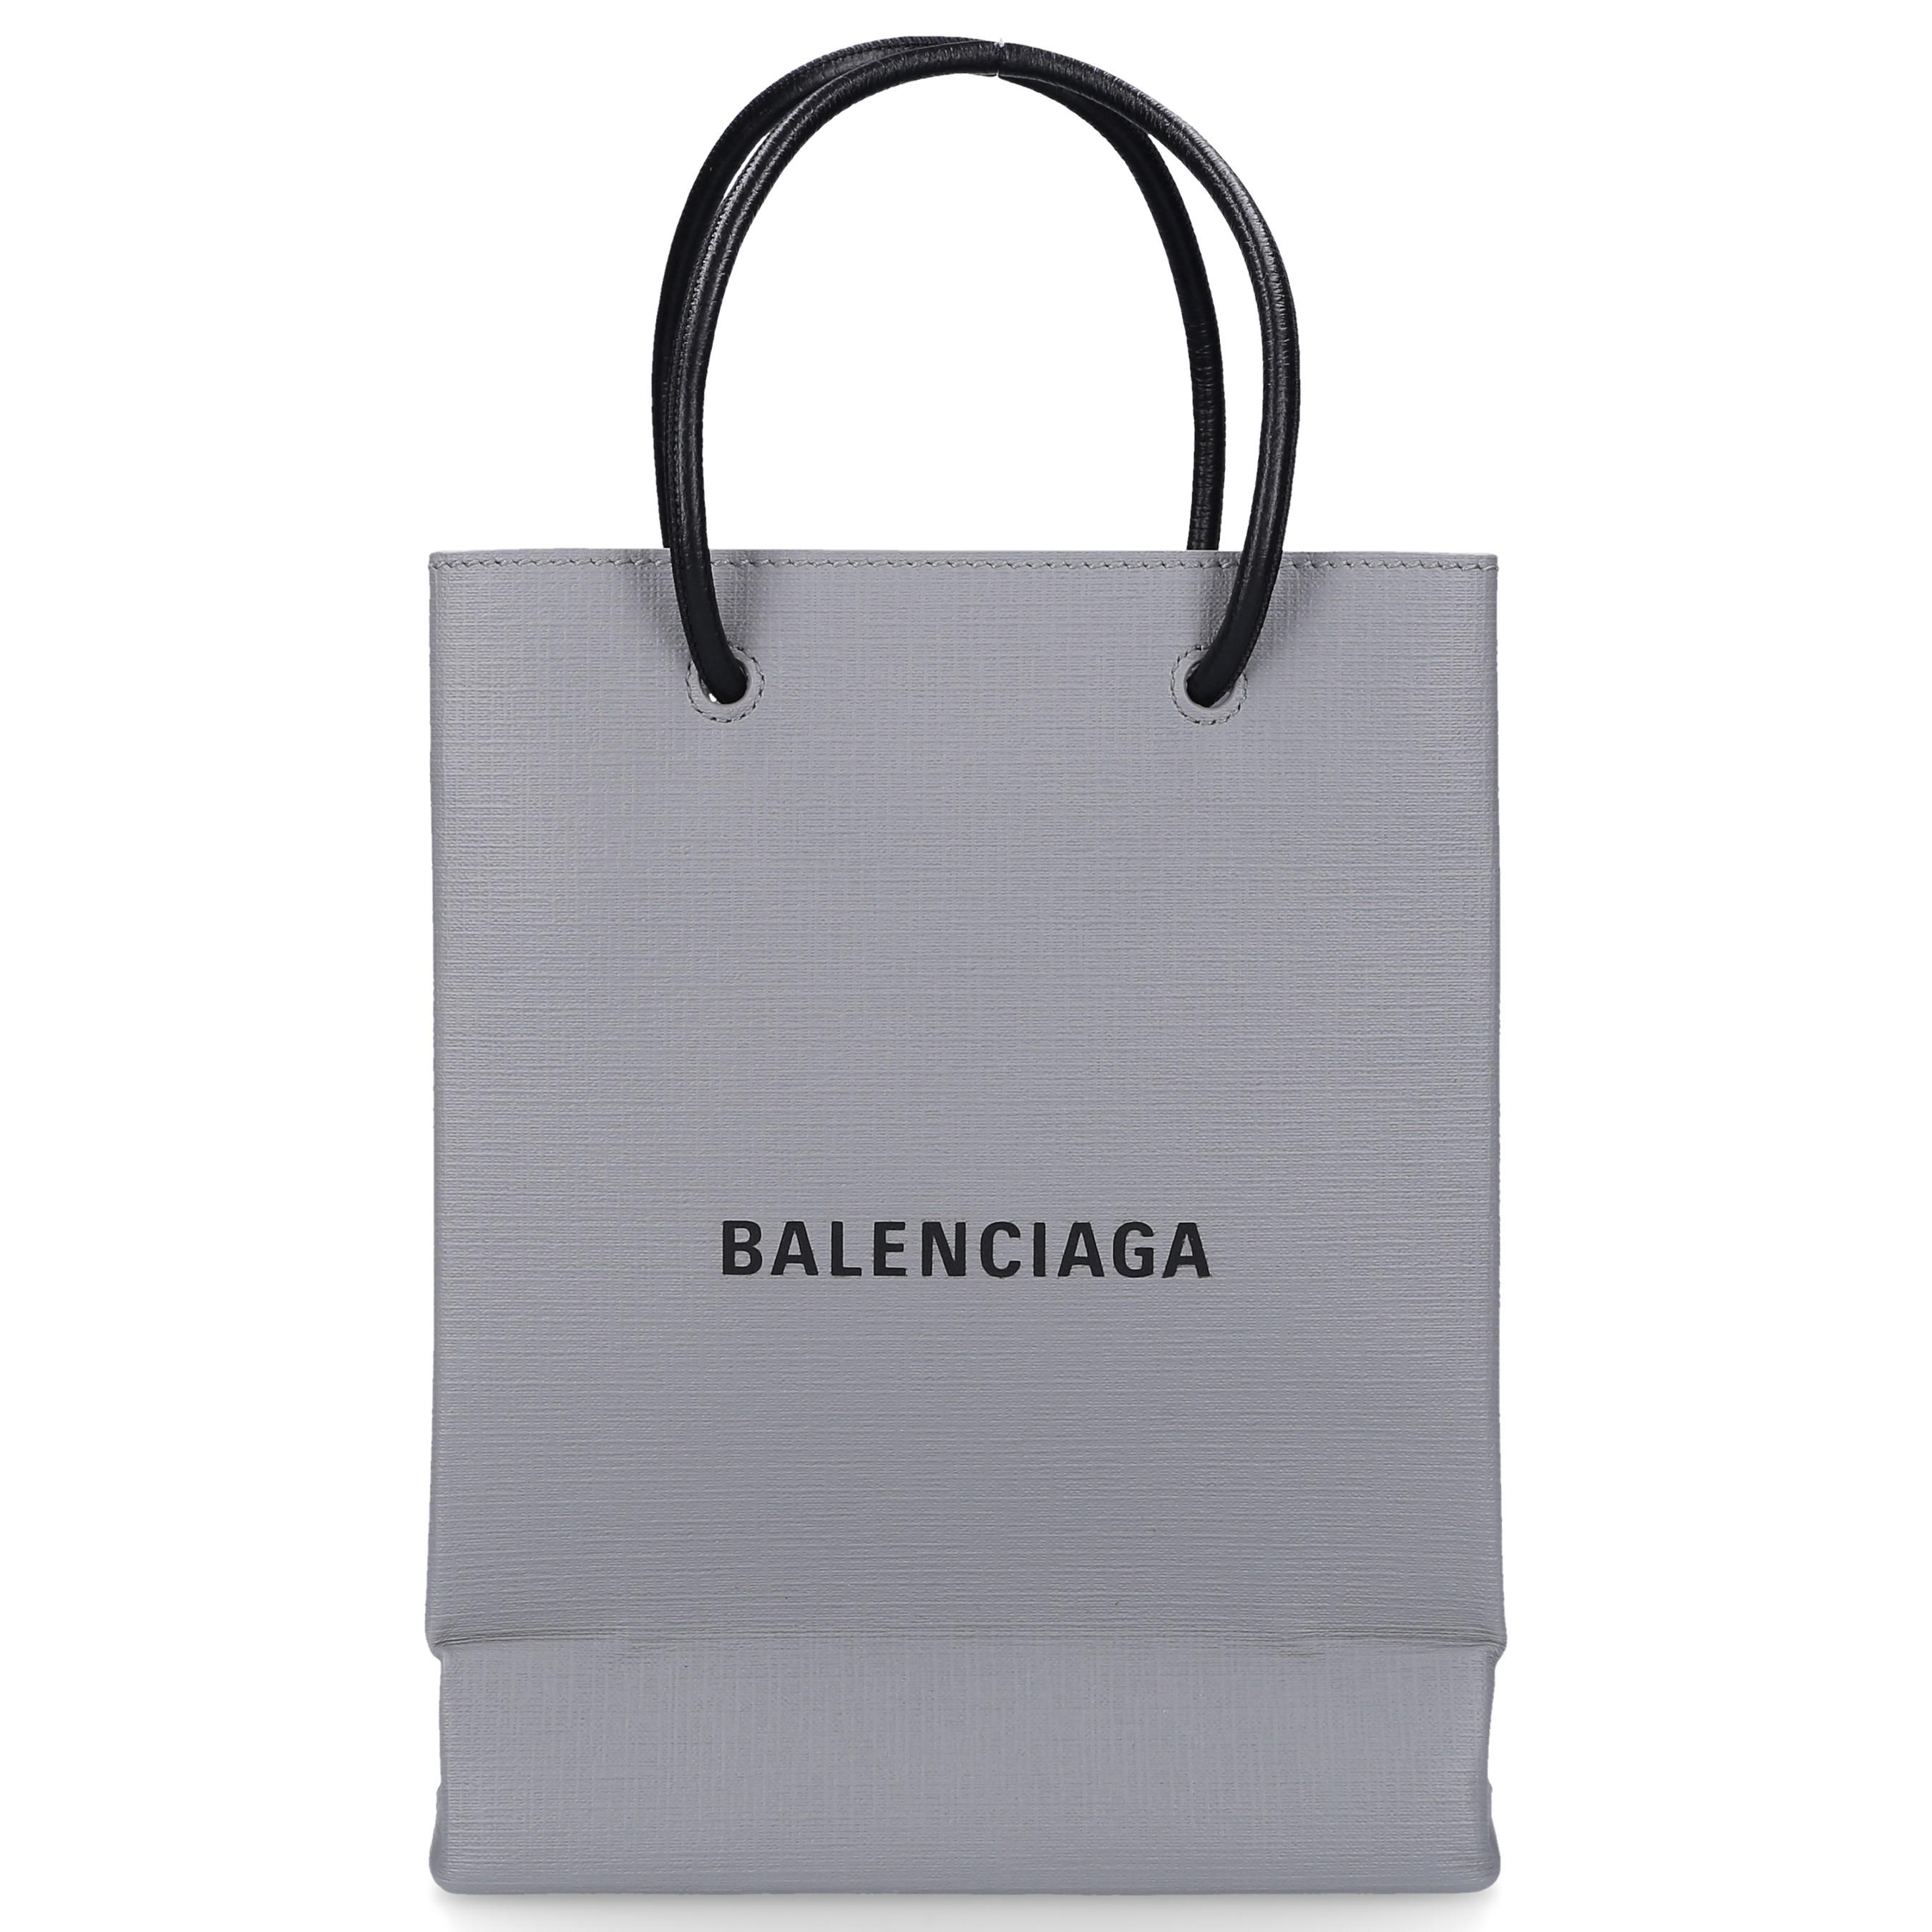 Balenciaga Handbag Shopping Tote Xxs Leather Logo Grey in Gray - Lyst